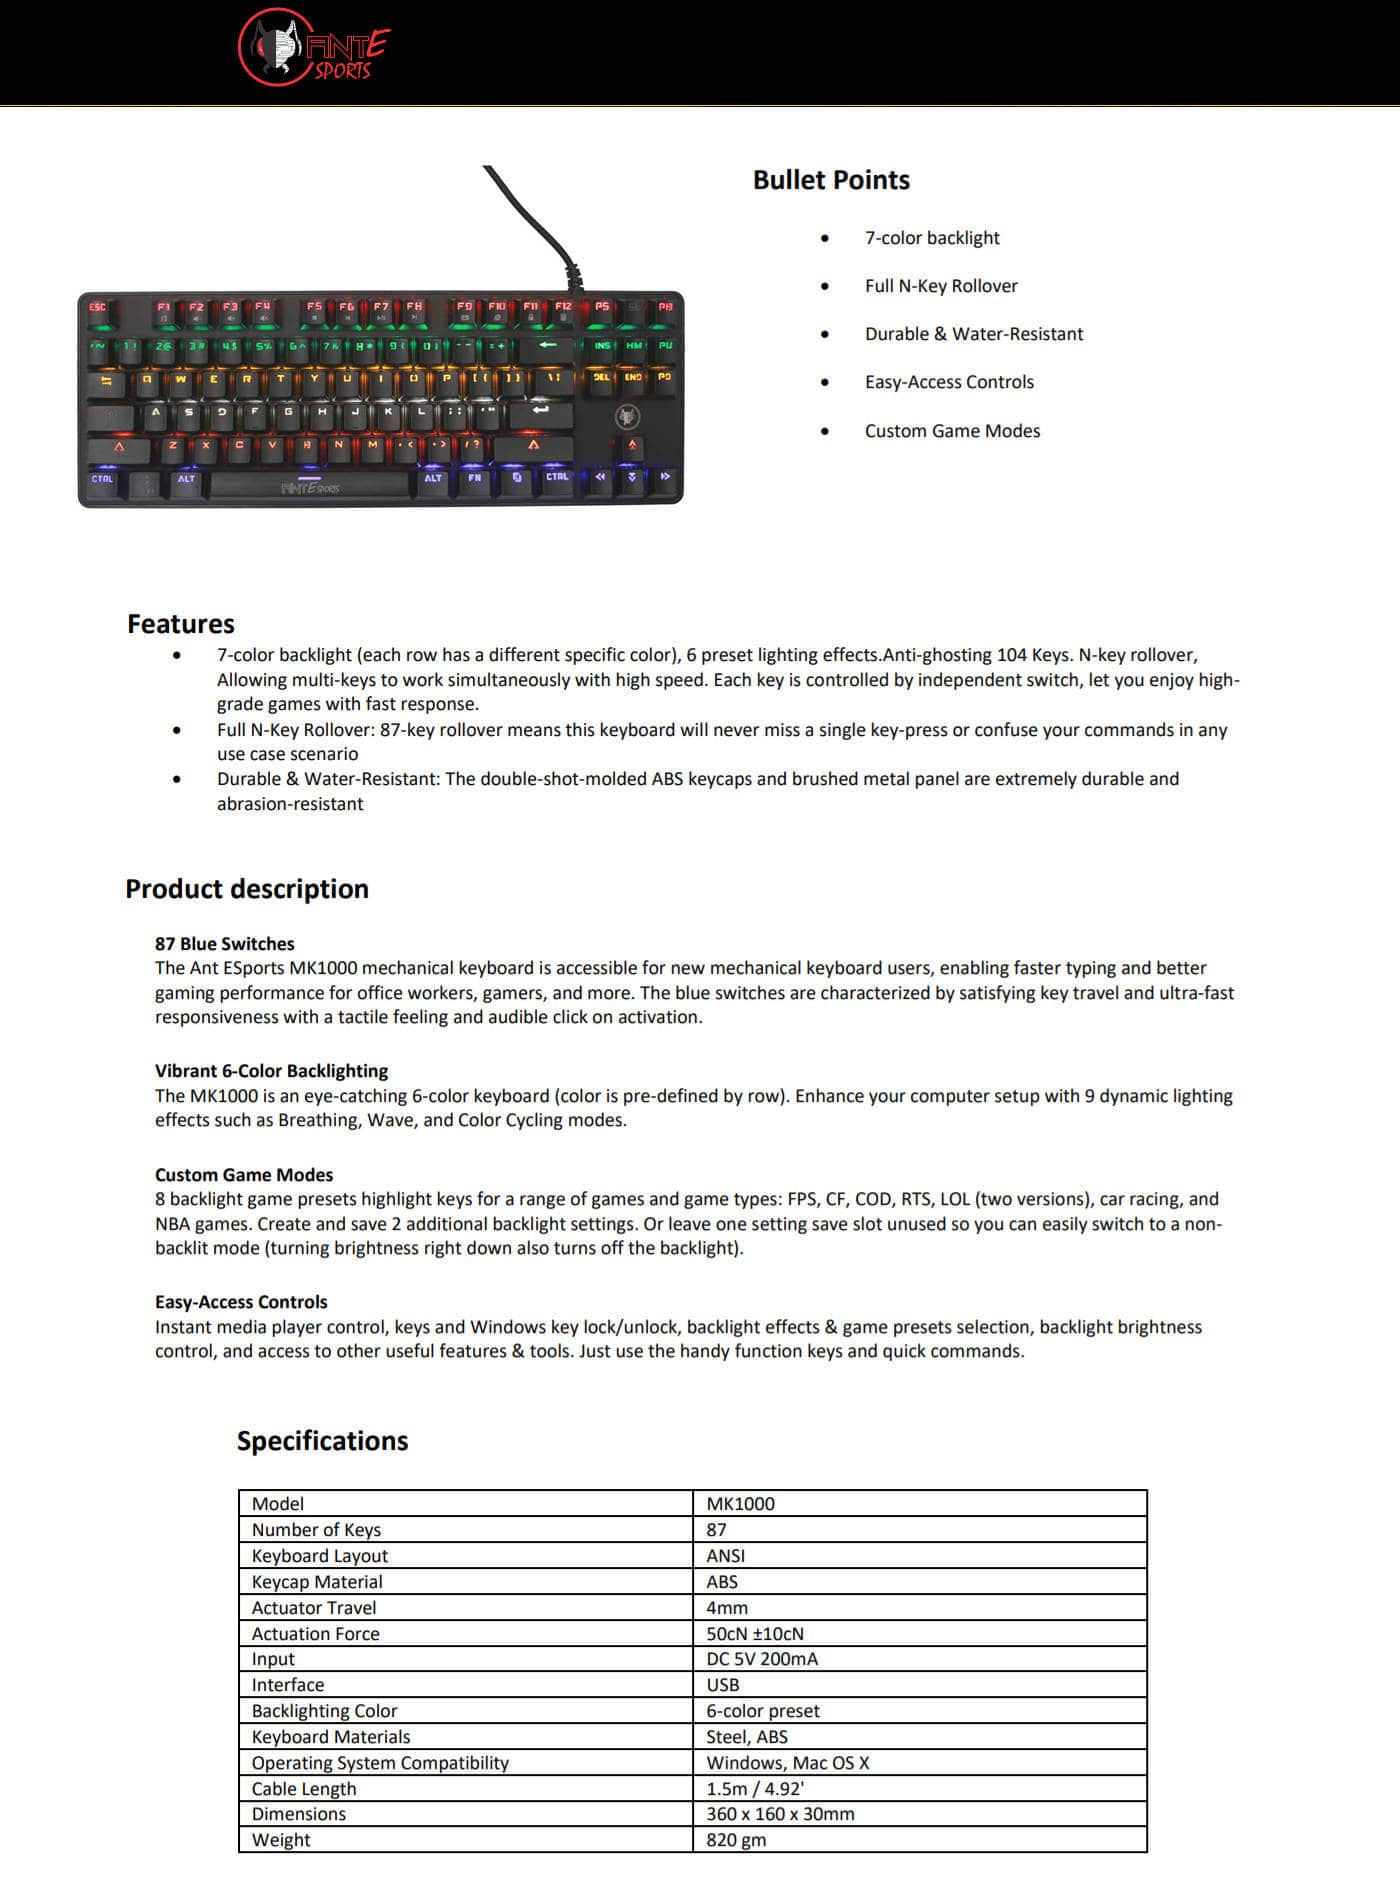  Buy Online AntEsports MK1000 Multicolour LED Backlit Wired TKL Mechanical Keyboard